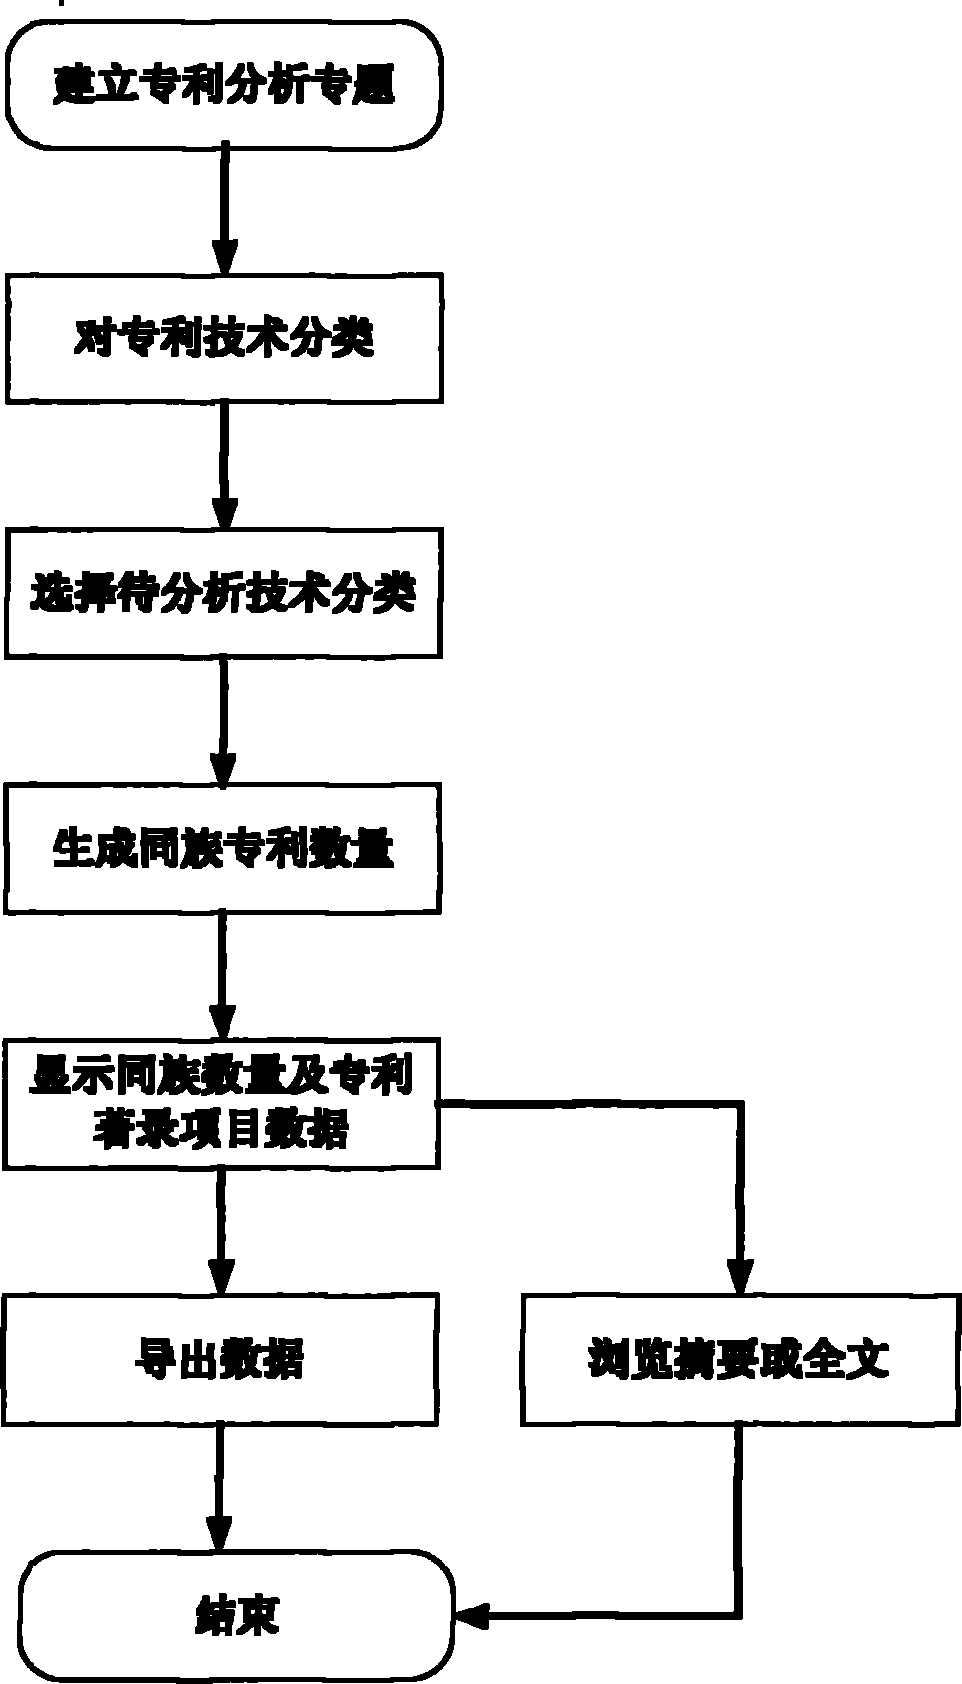 Patent technology family analysis method